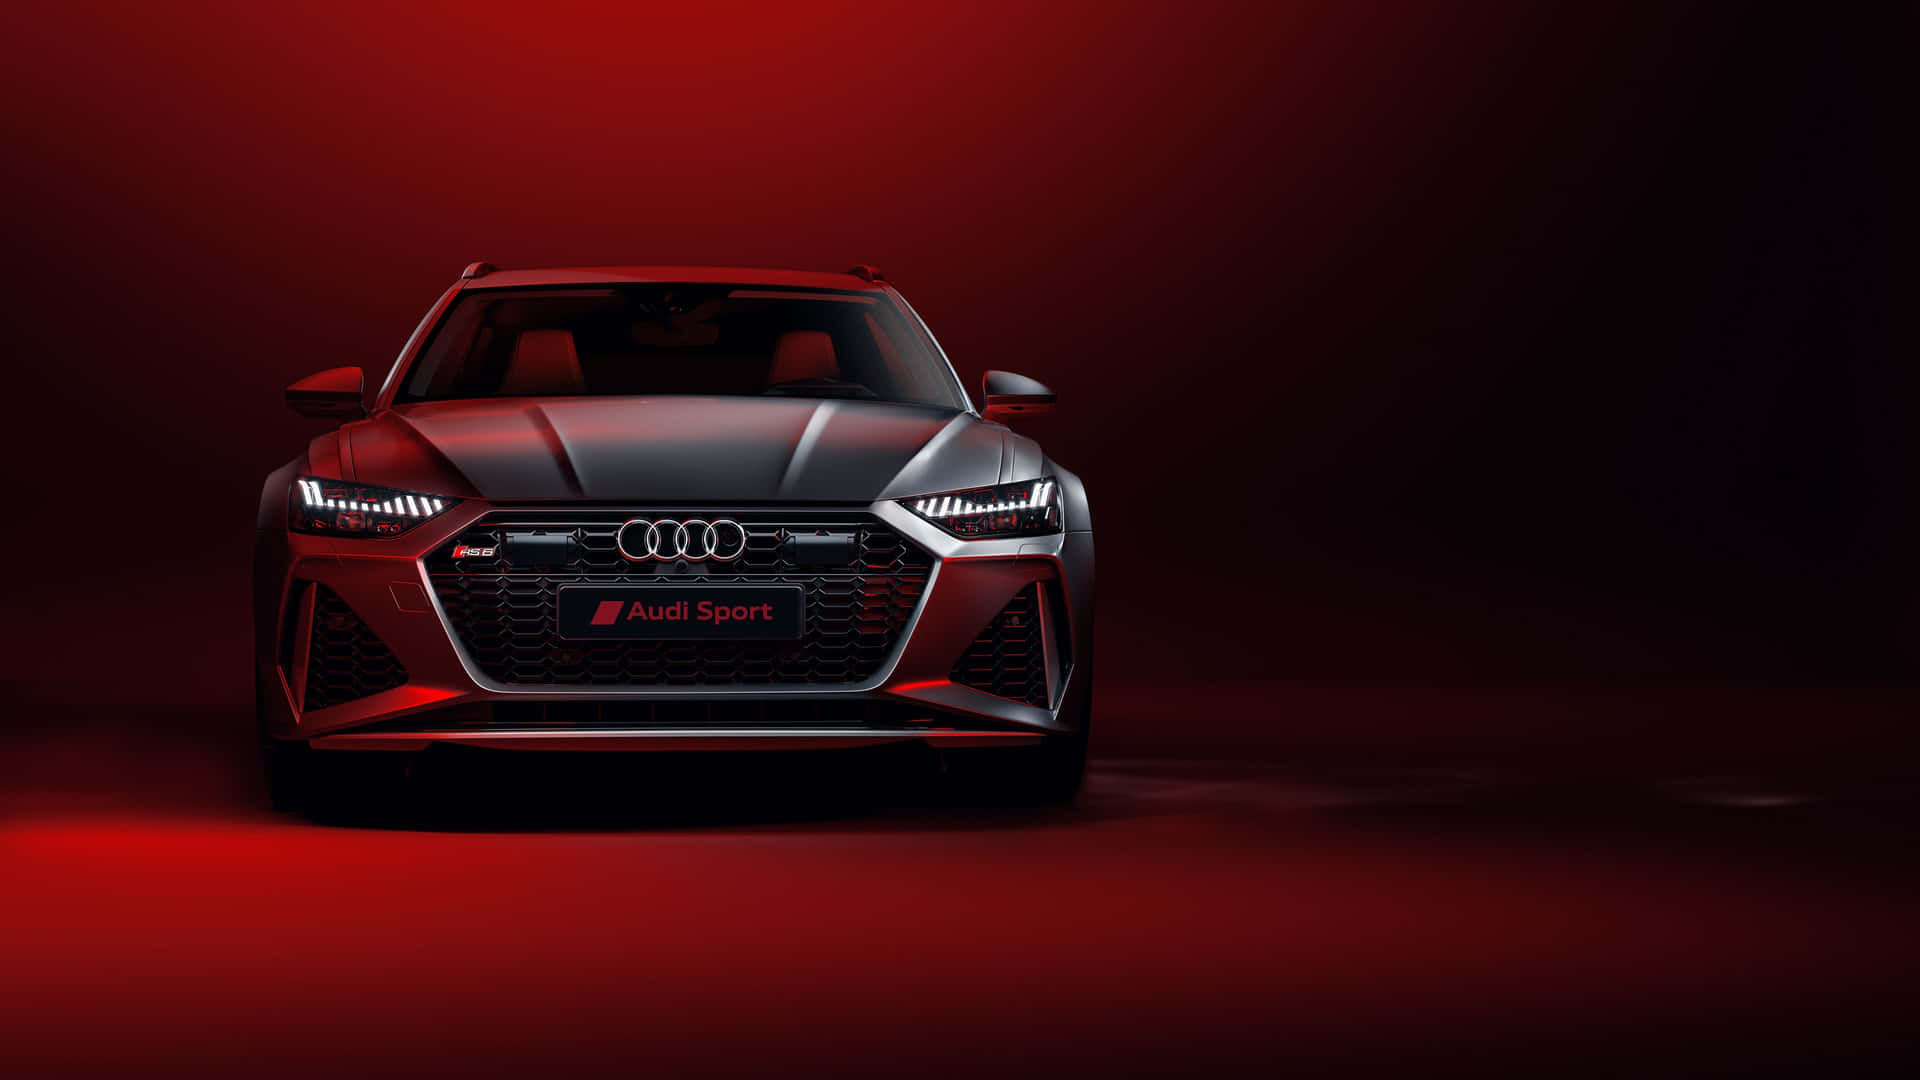 Audi Sport Red Backdrop Wallpaper